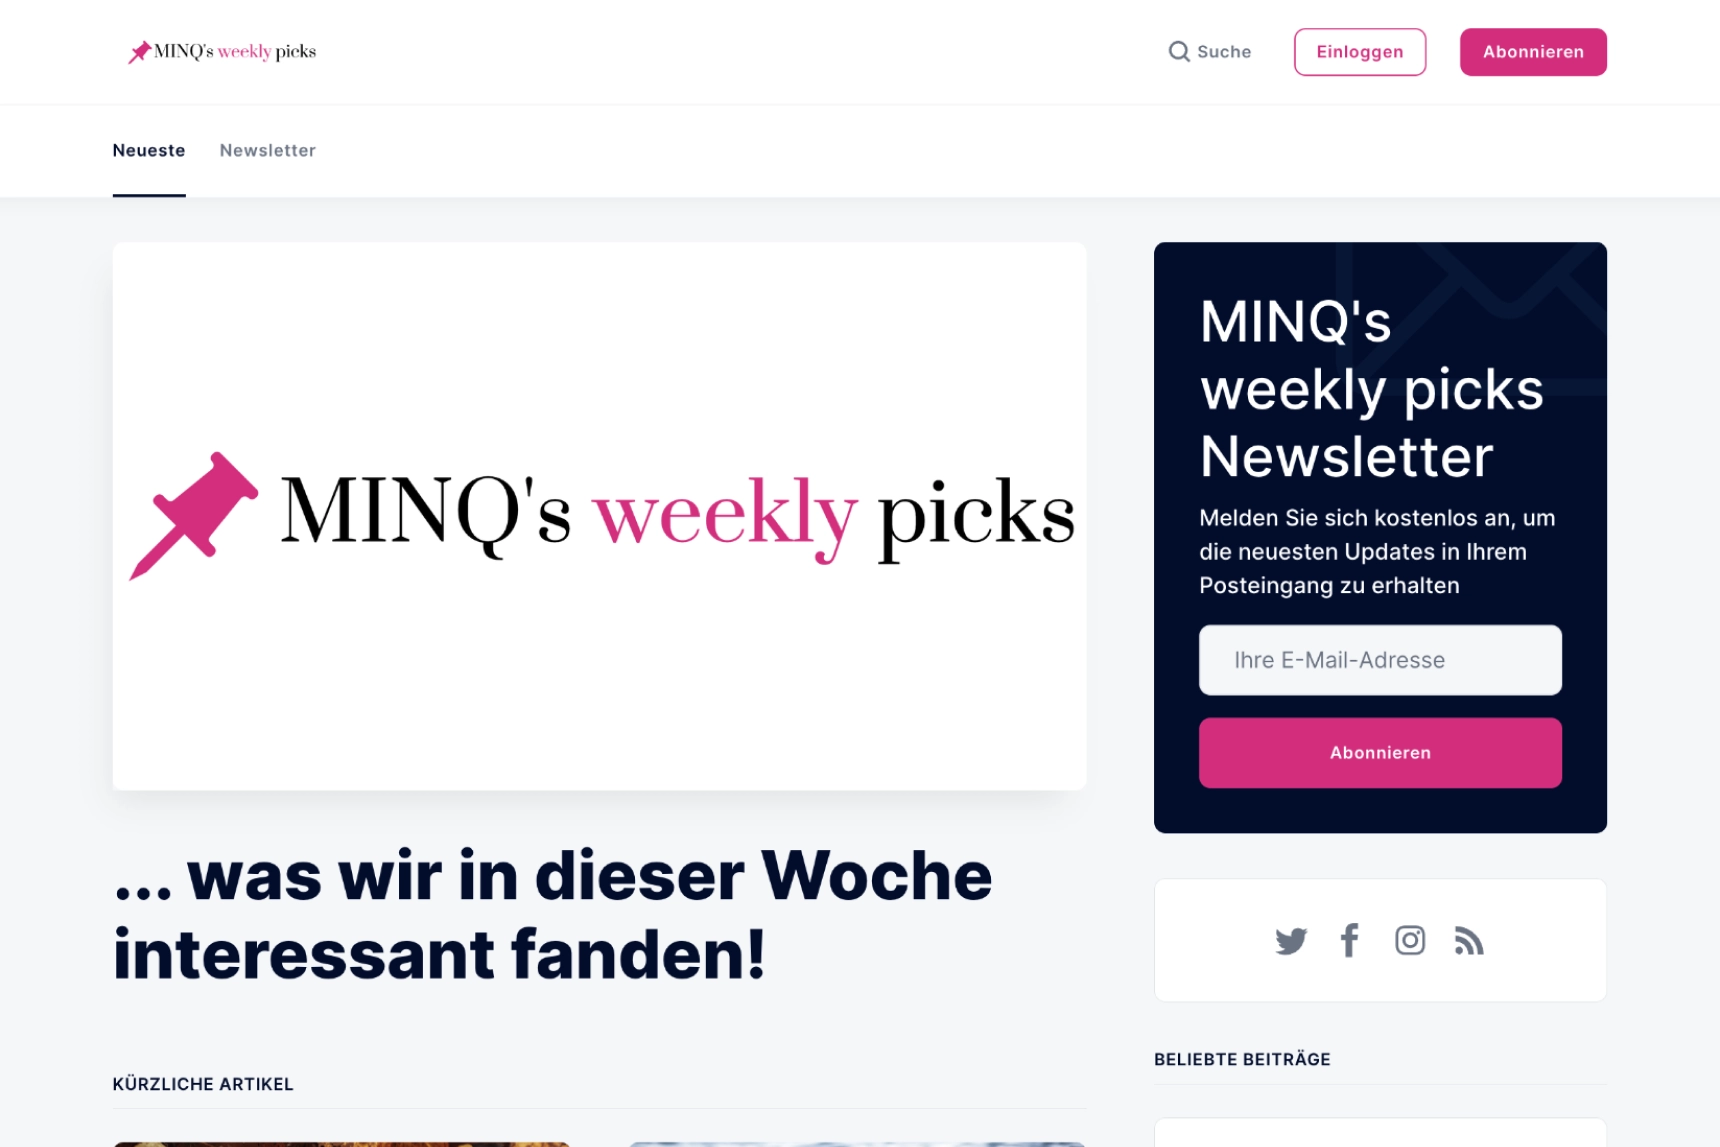 MINQ's weekly picks